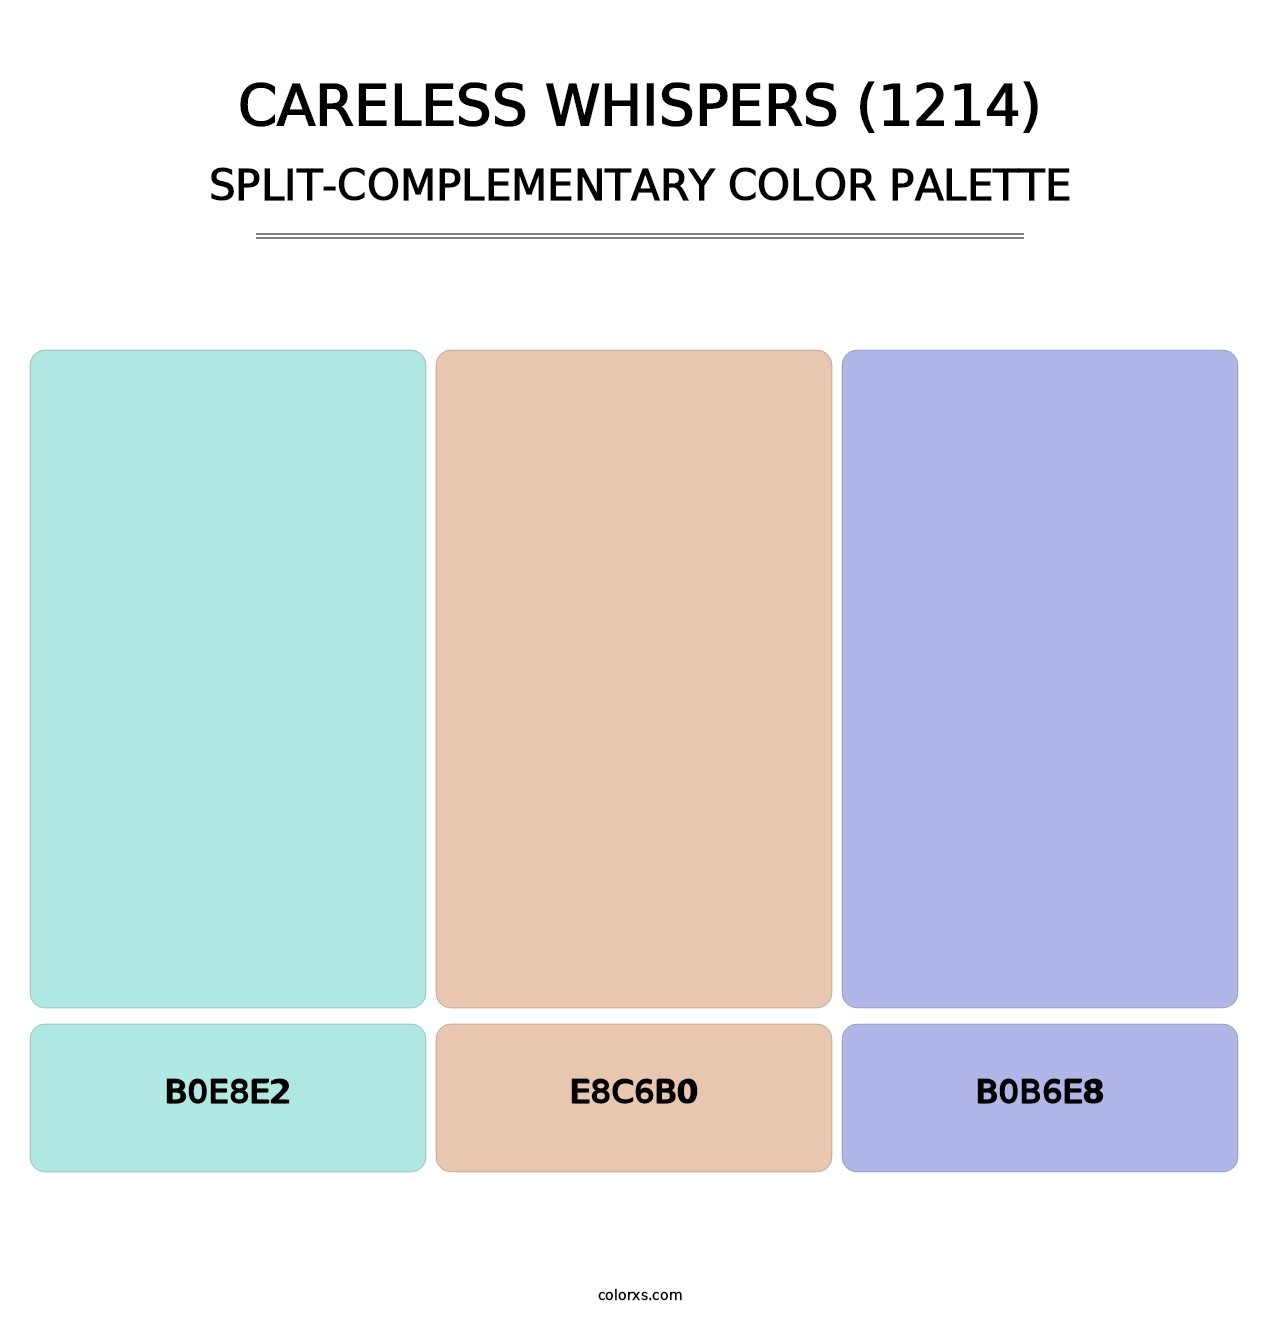 Careless Whispers (1214) - Split-Complementary Color Palette